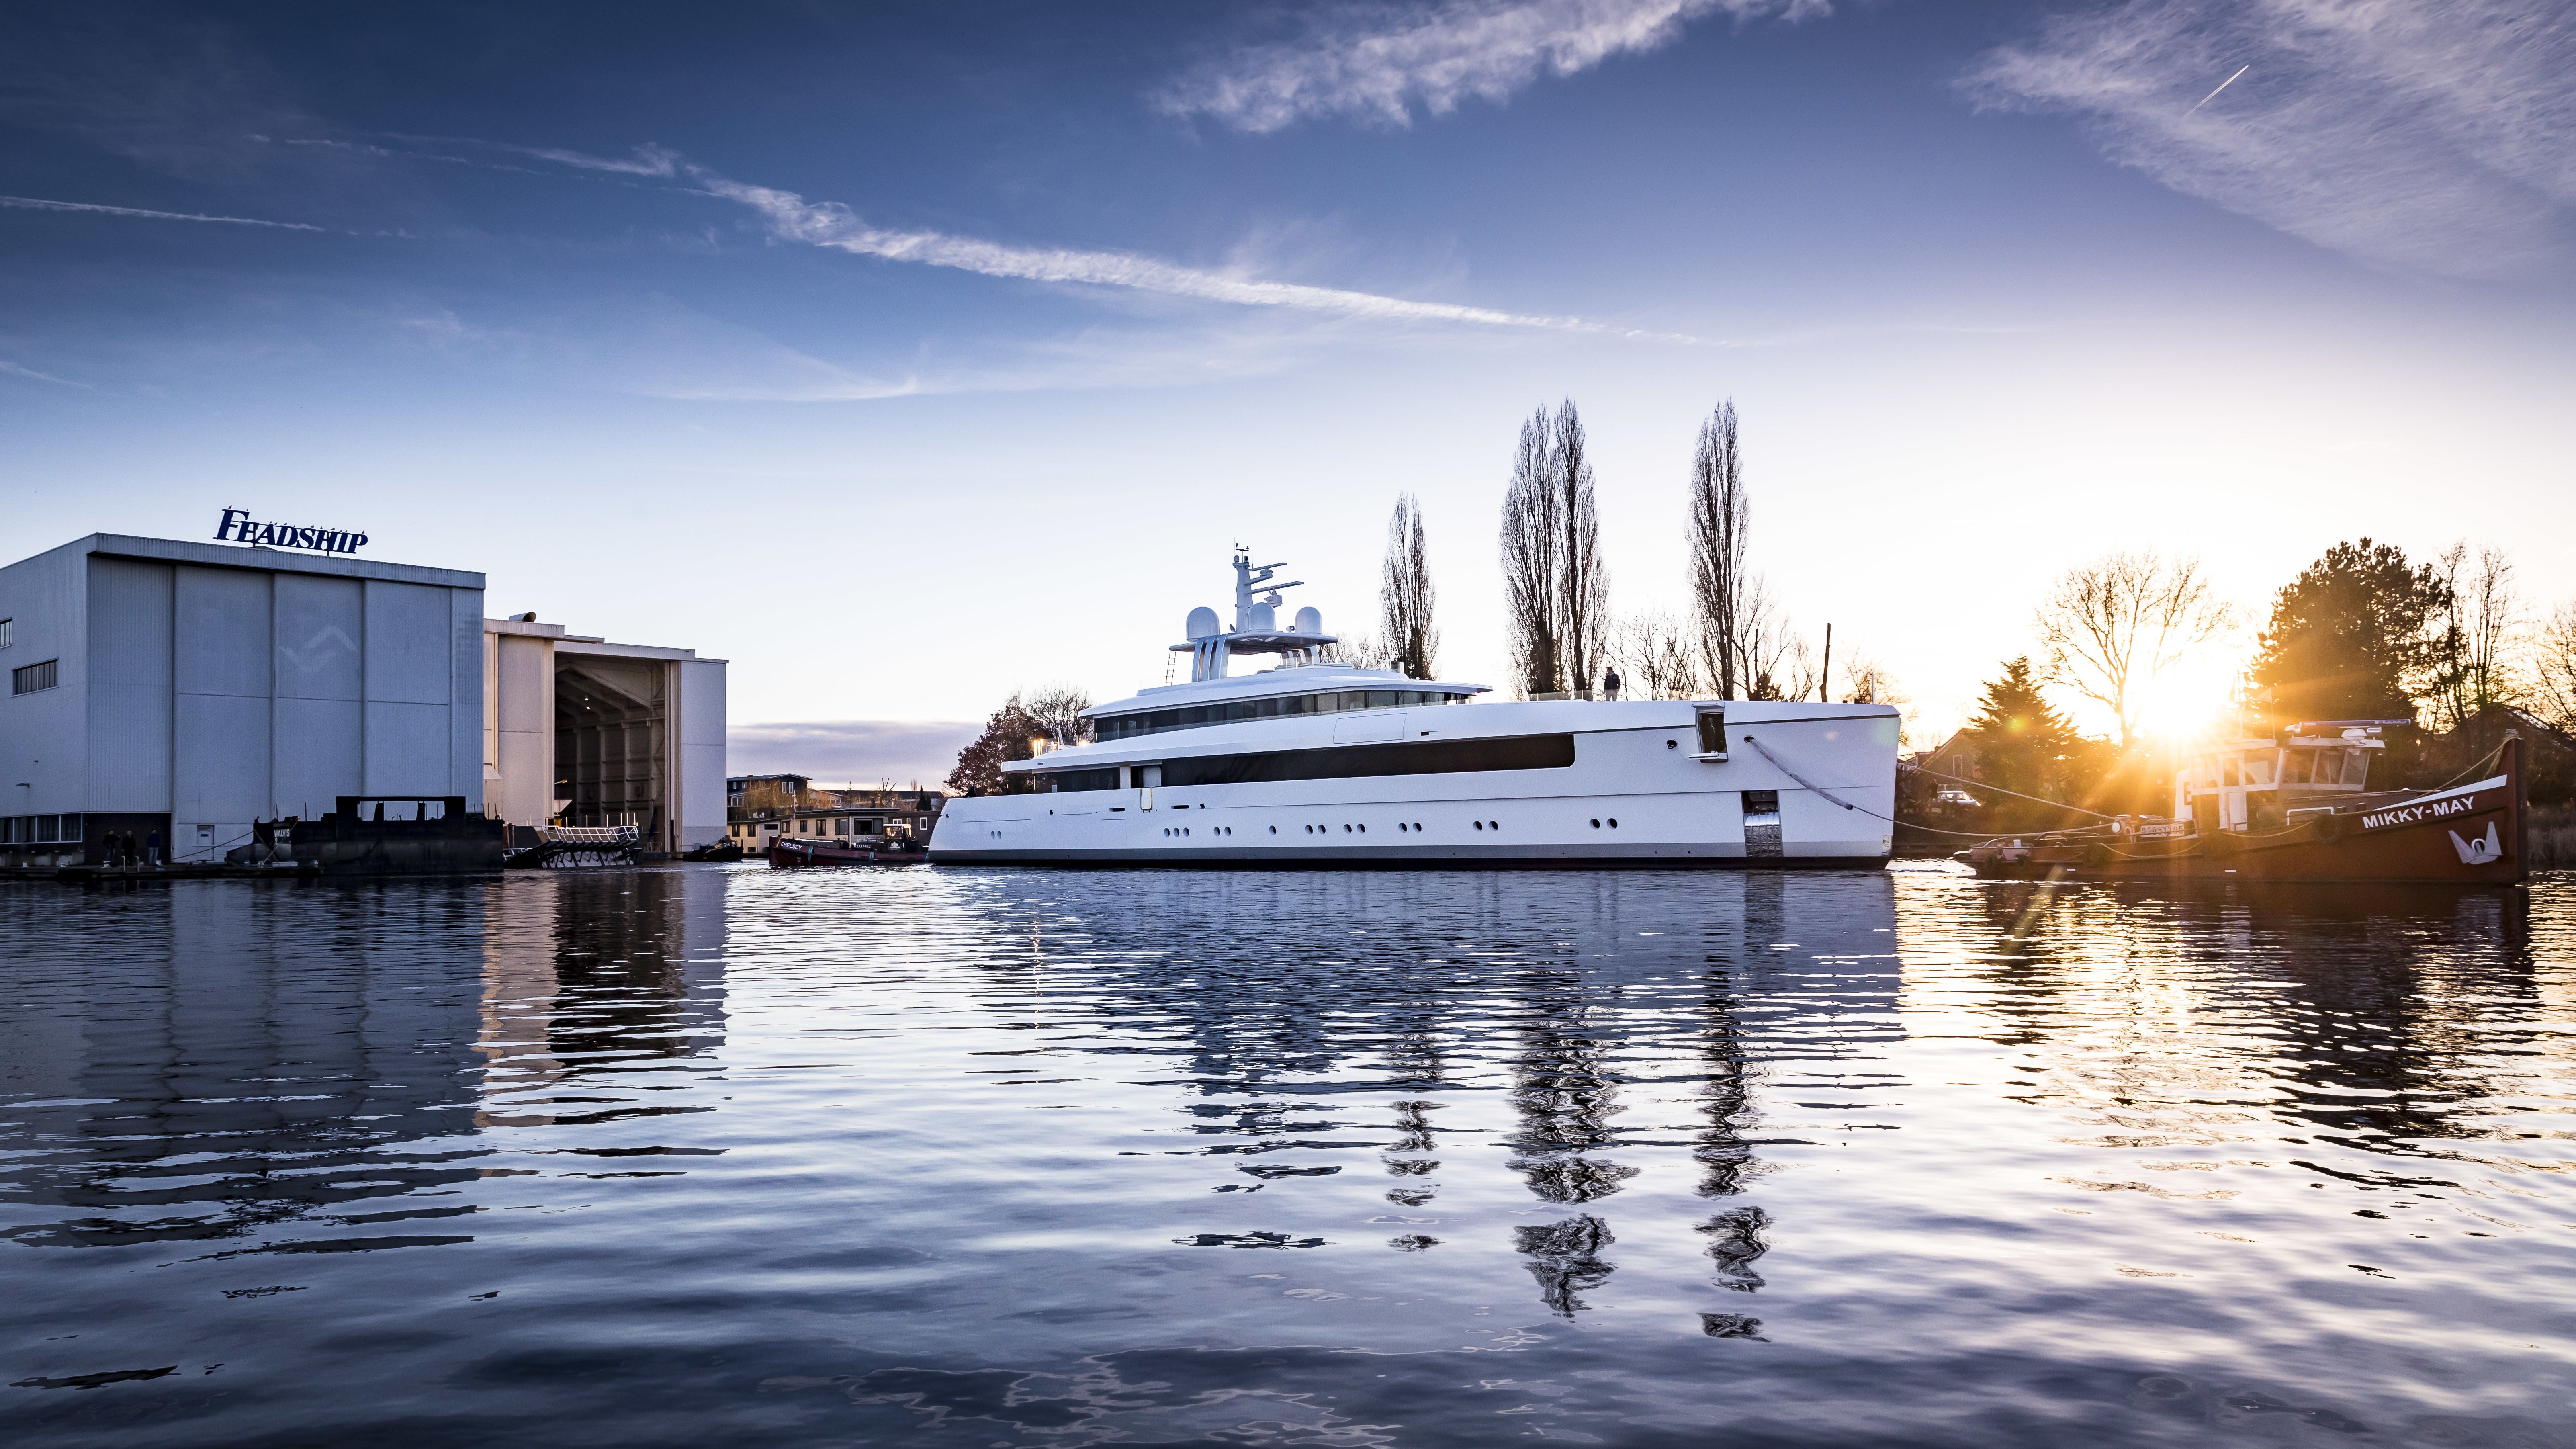 Feadship launches its second largest fully aluminium yacht 'Najiba